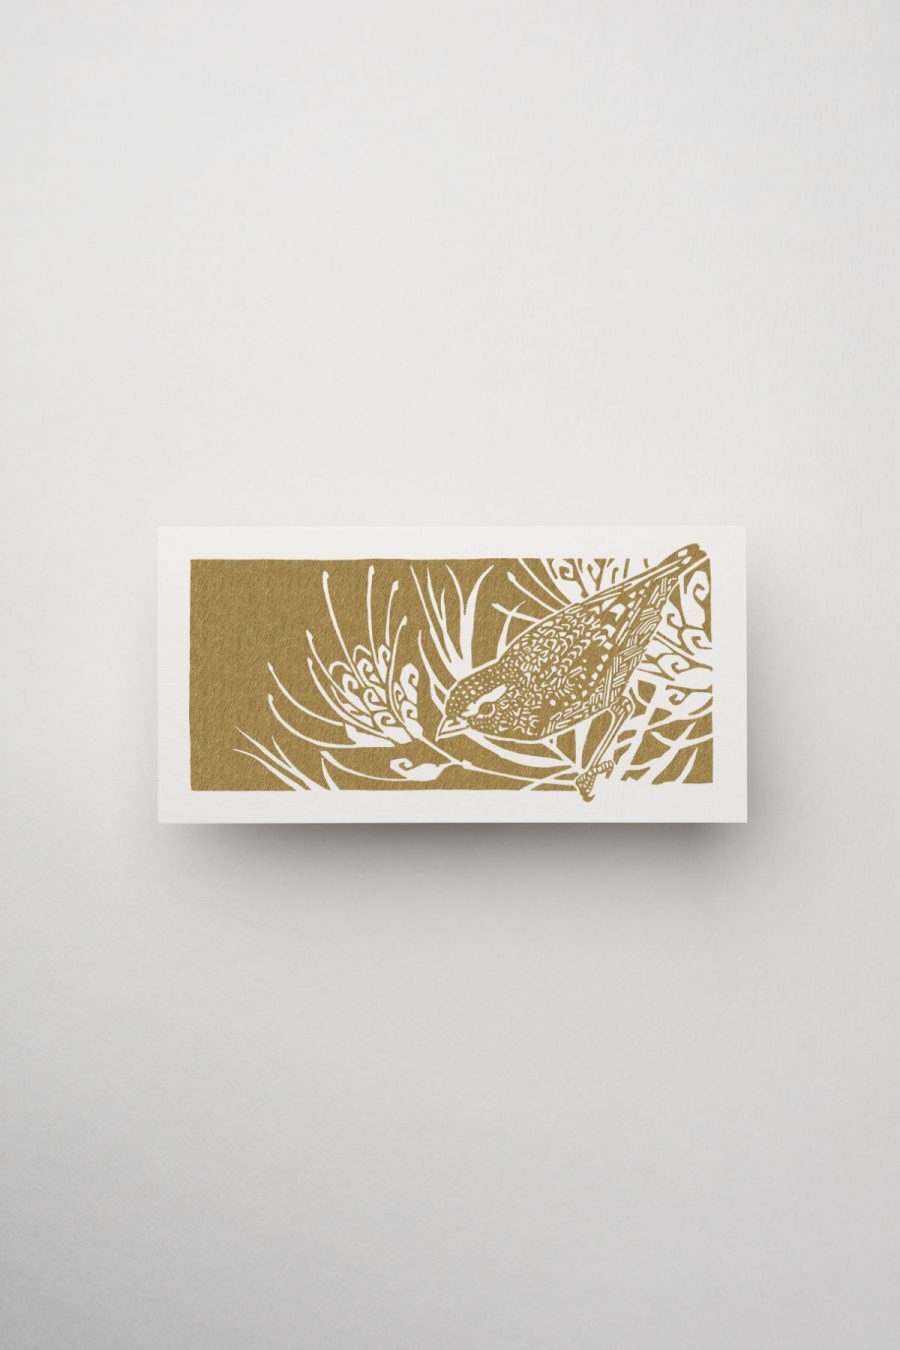 Greetings card 'Pardalotte' printed in Gold